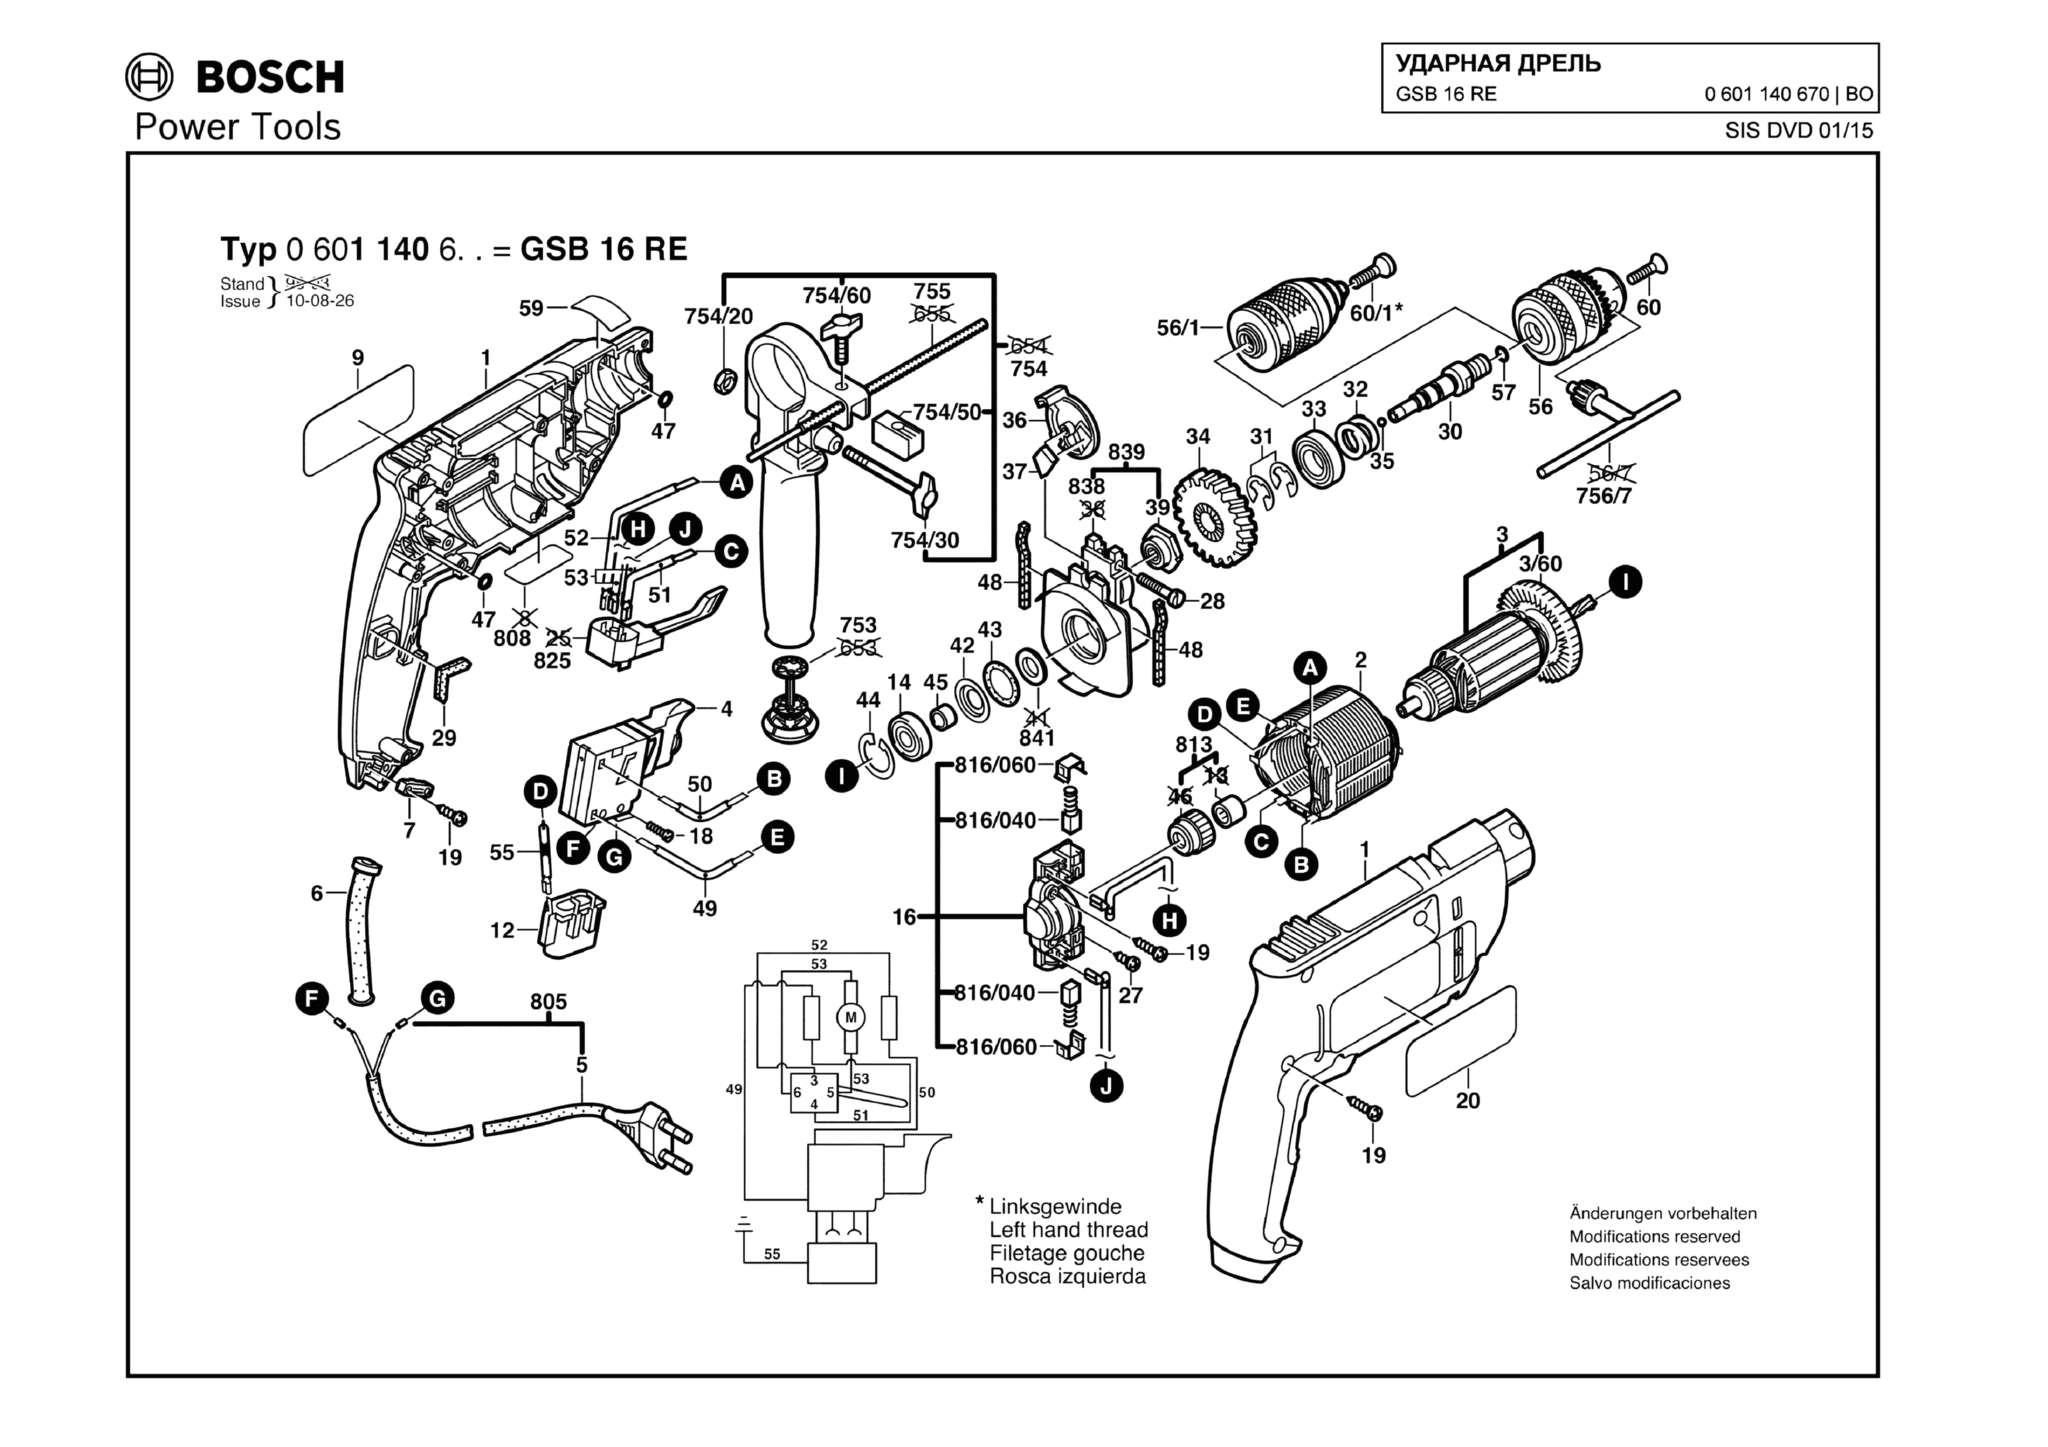 Запчасти, схема и деталировка Bosch GSB 16 RE (ТИП 0601140670)